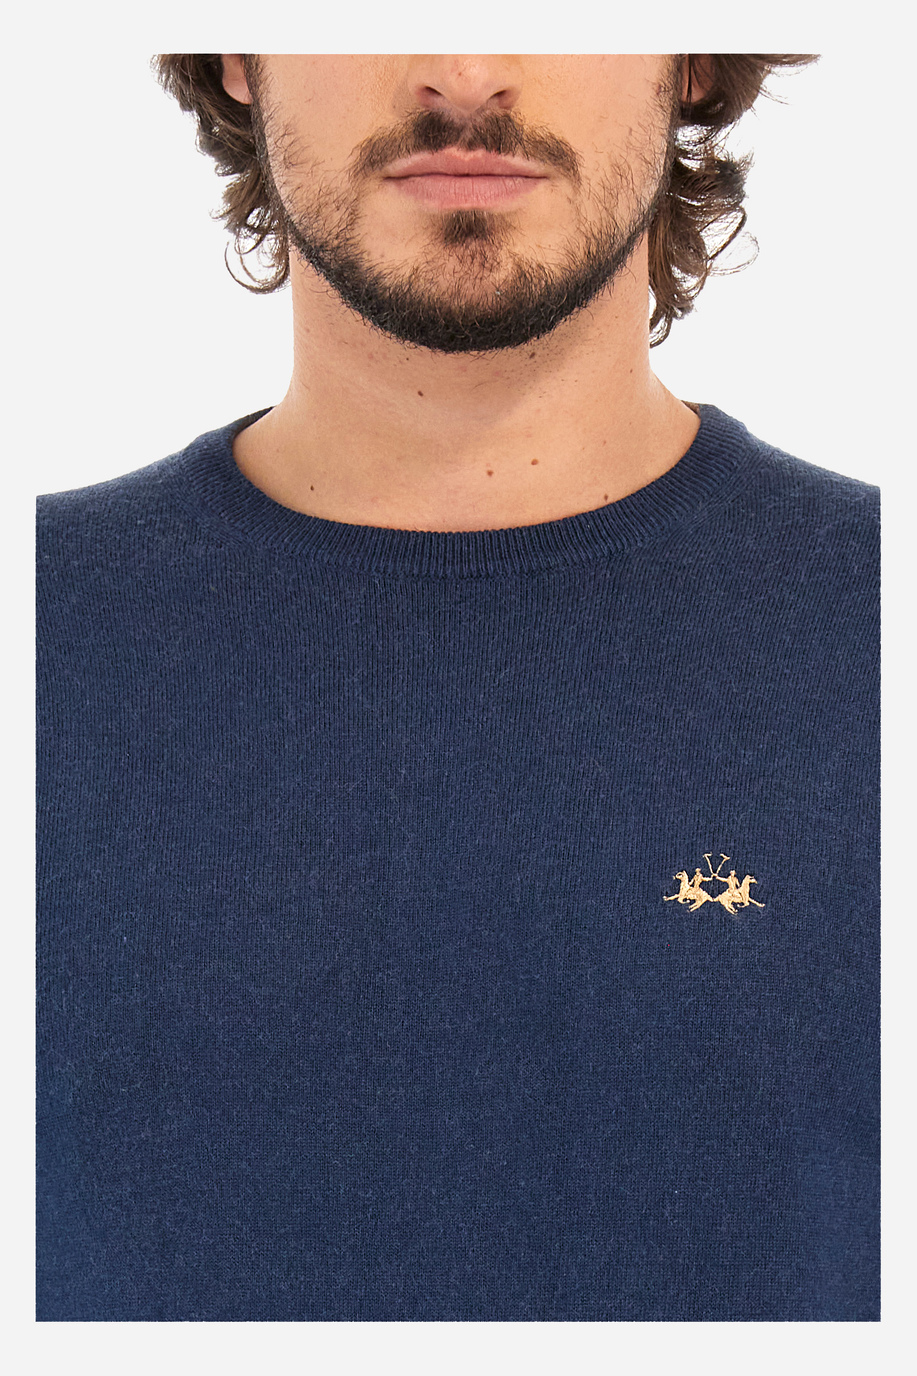 Man shirt in regular fit - Wilmar - Gifts under €150 for him | La Martina - Official Online Shop